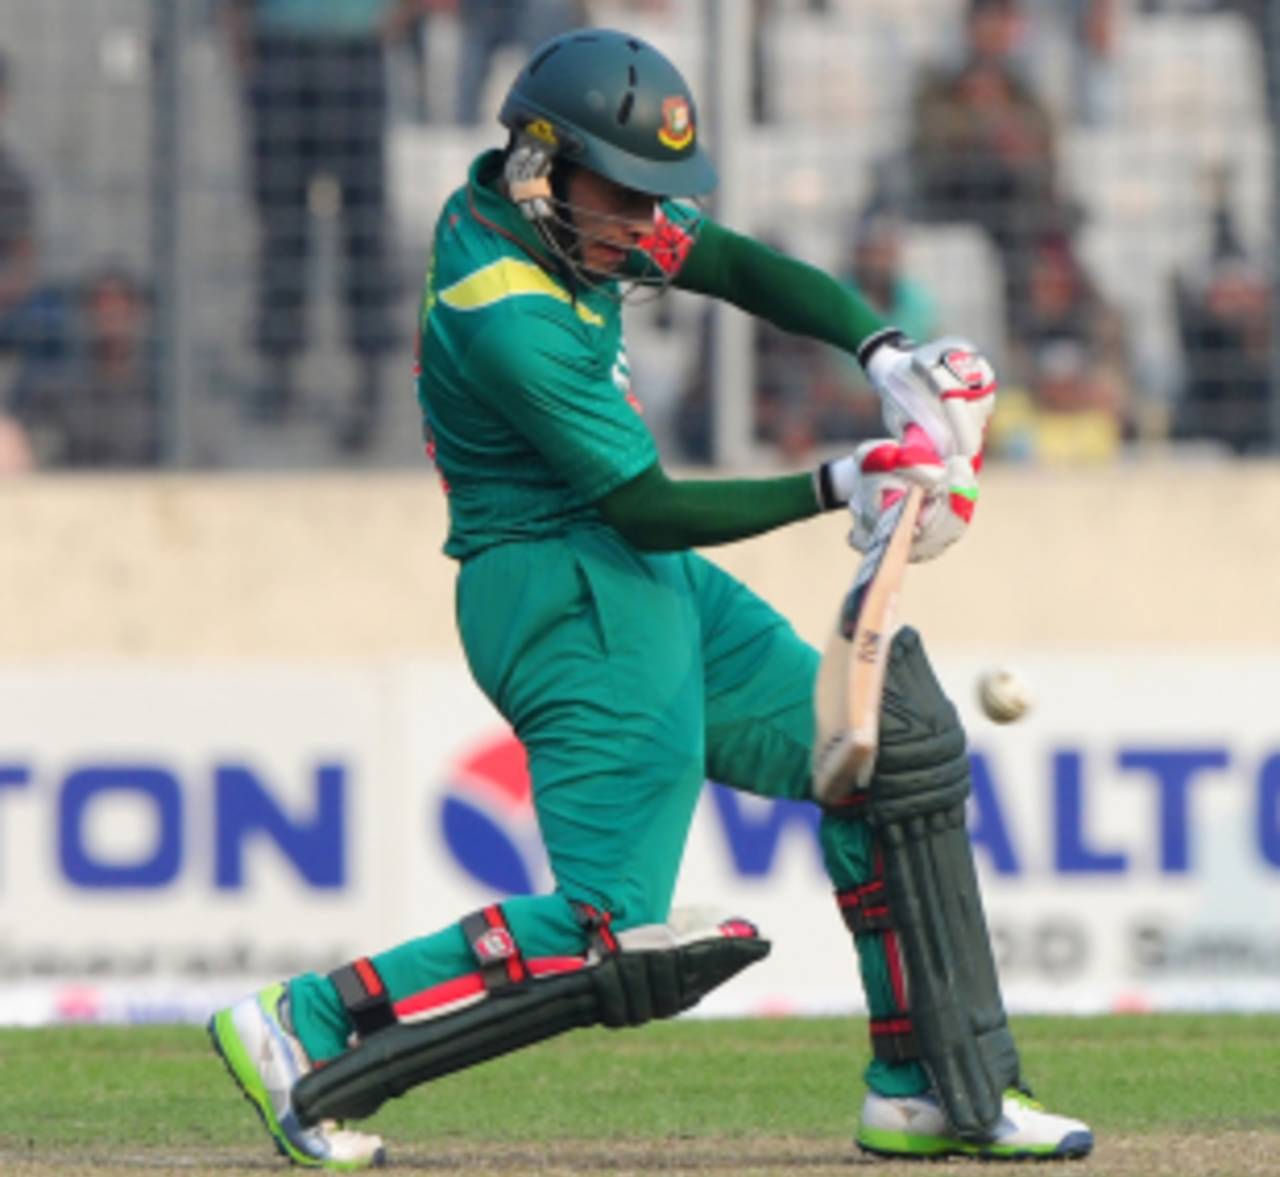 Mushfiqur Rahim shapes to play a drive, Bangladesh v New Zealand, 2nd ODI, Mirpur, October 31, 2013